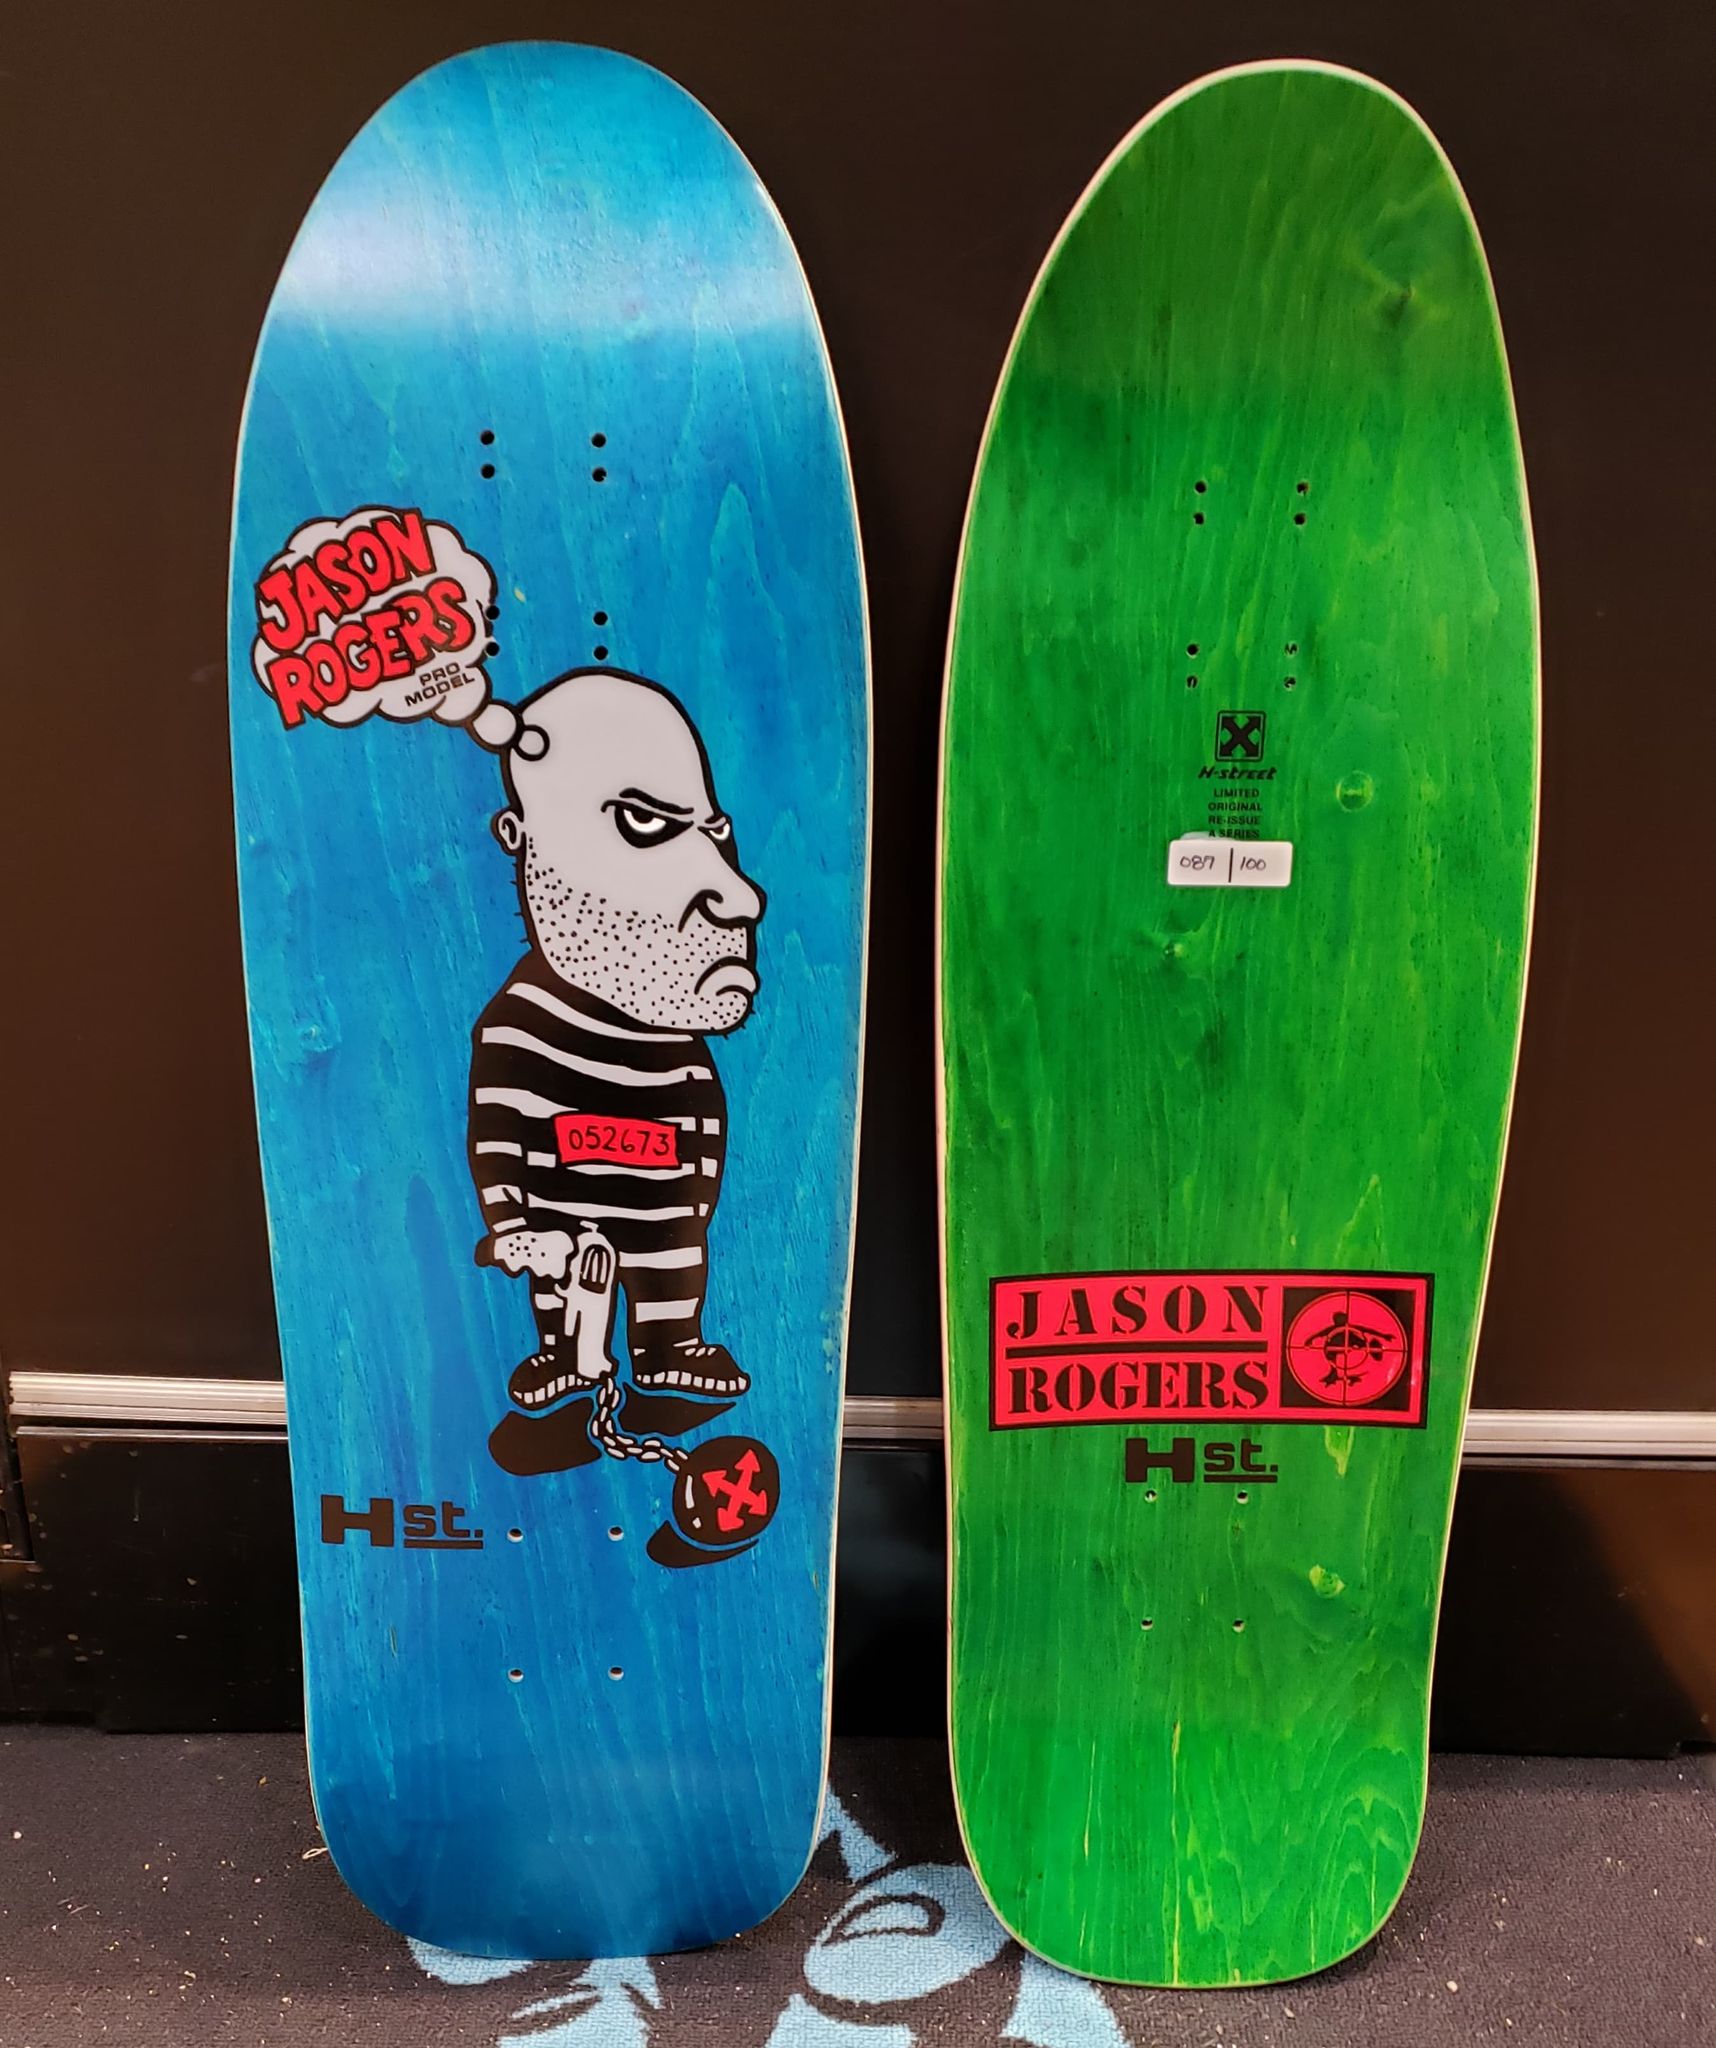 H-Street Jason Rogers Ball & Chain Skateboard Deck - The Dark Slide